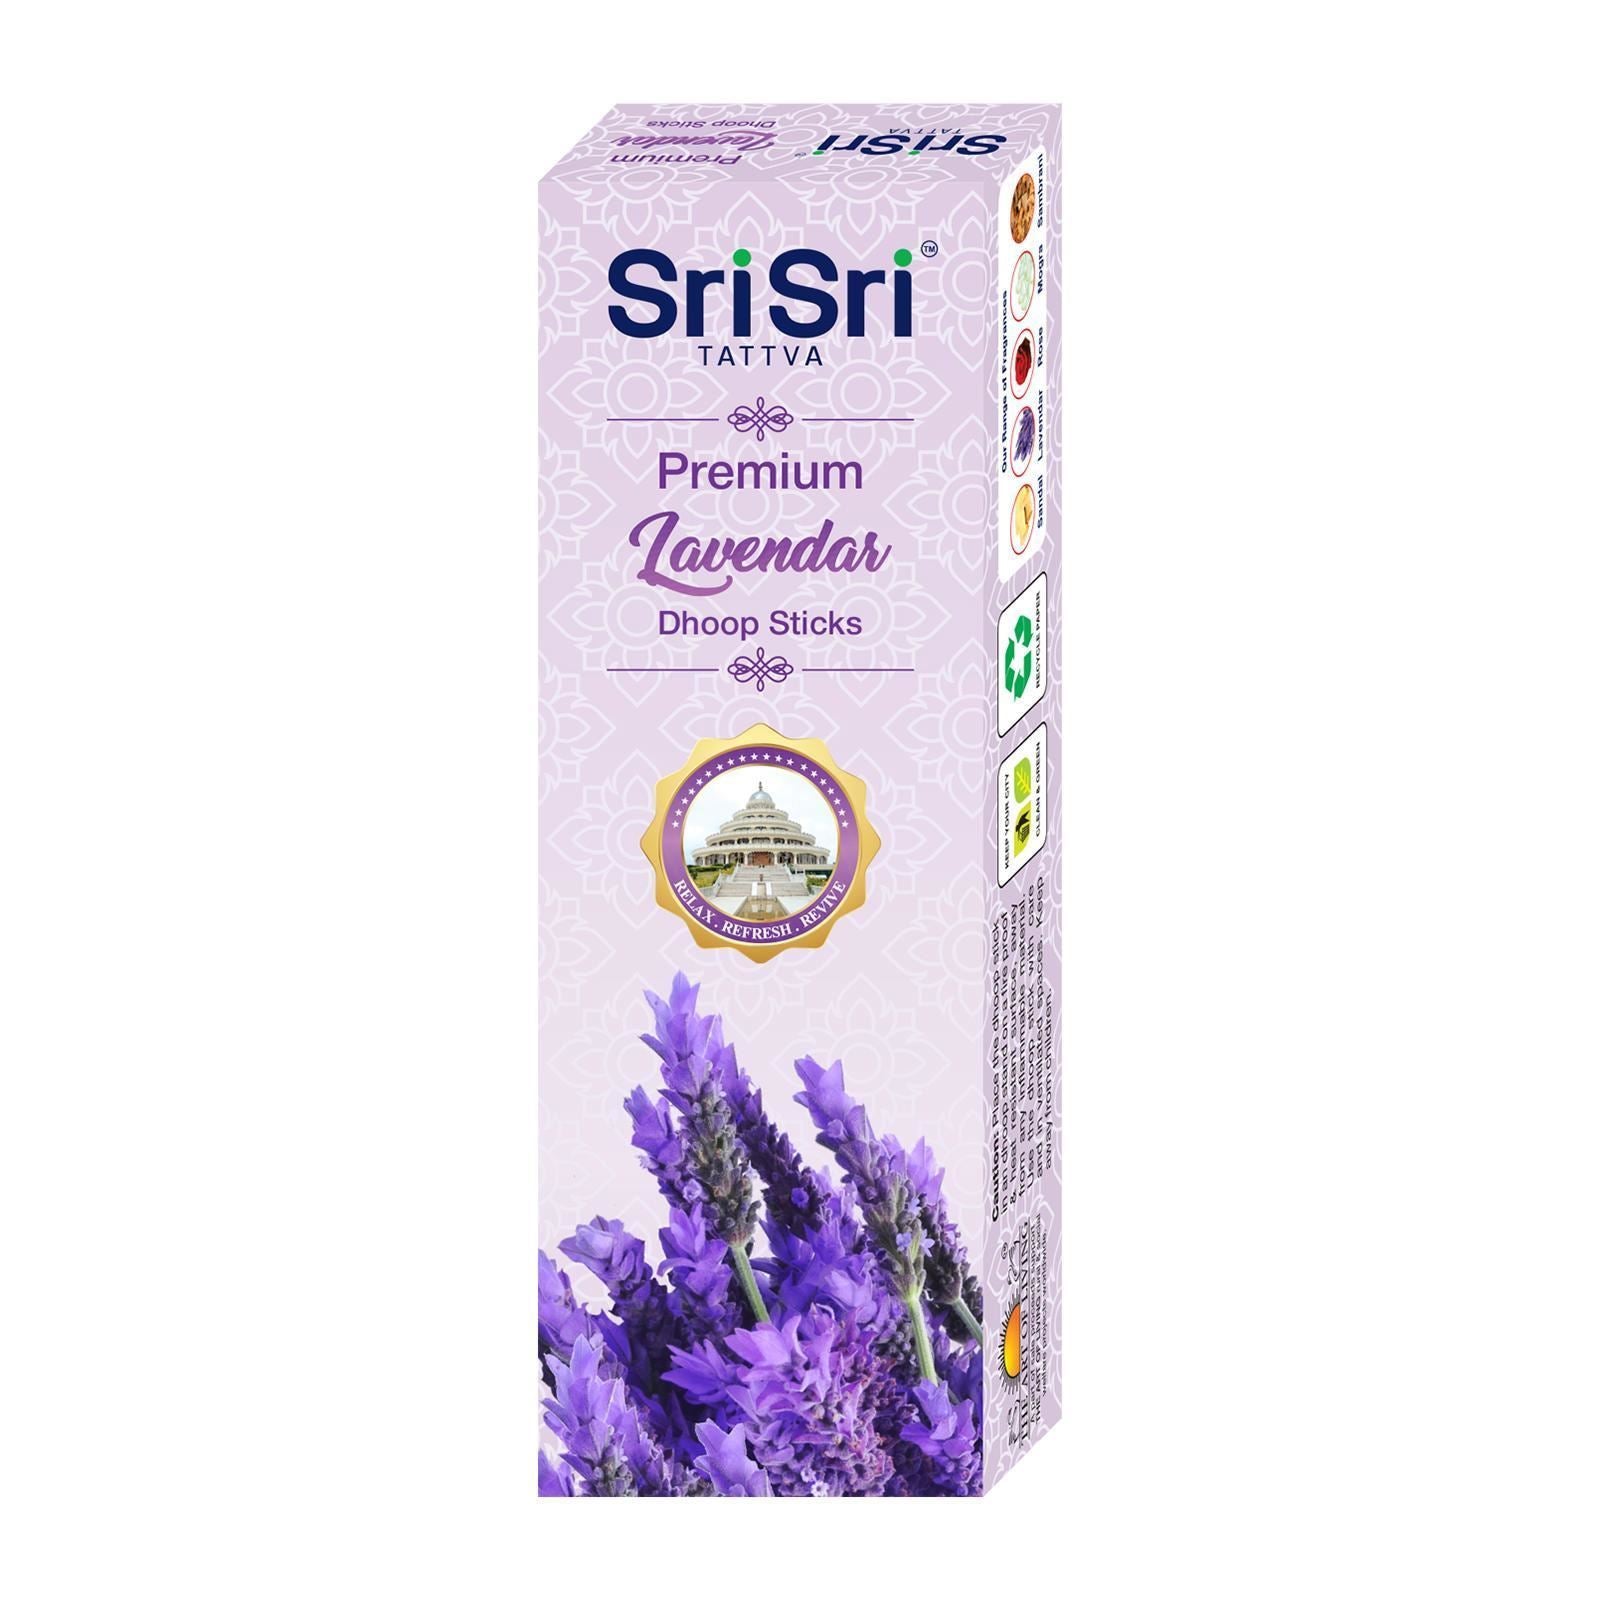 Sri Sri Tattva Premium Lavender Dhoop Sticks